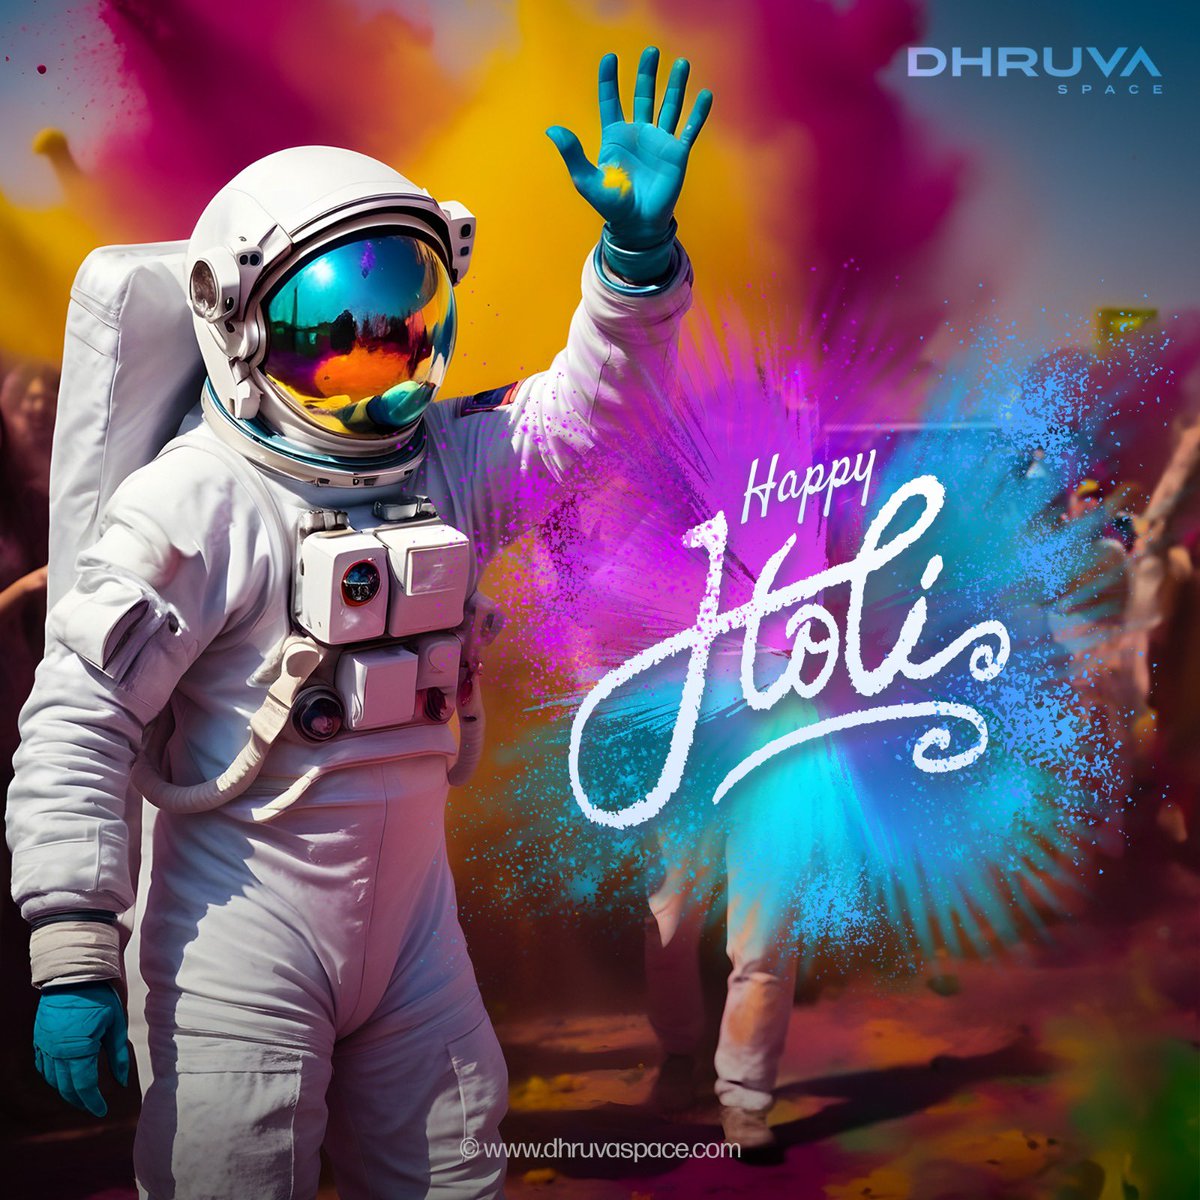 Wishing everyone across the cosmos a #HappyHoli!